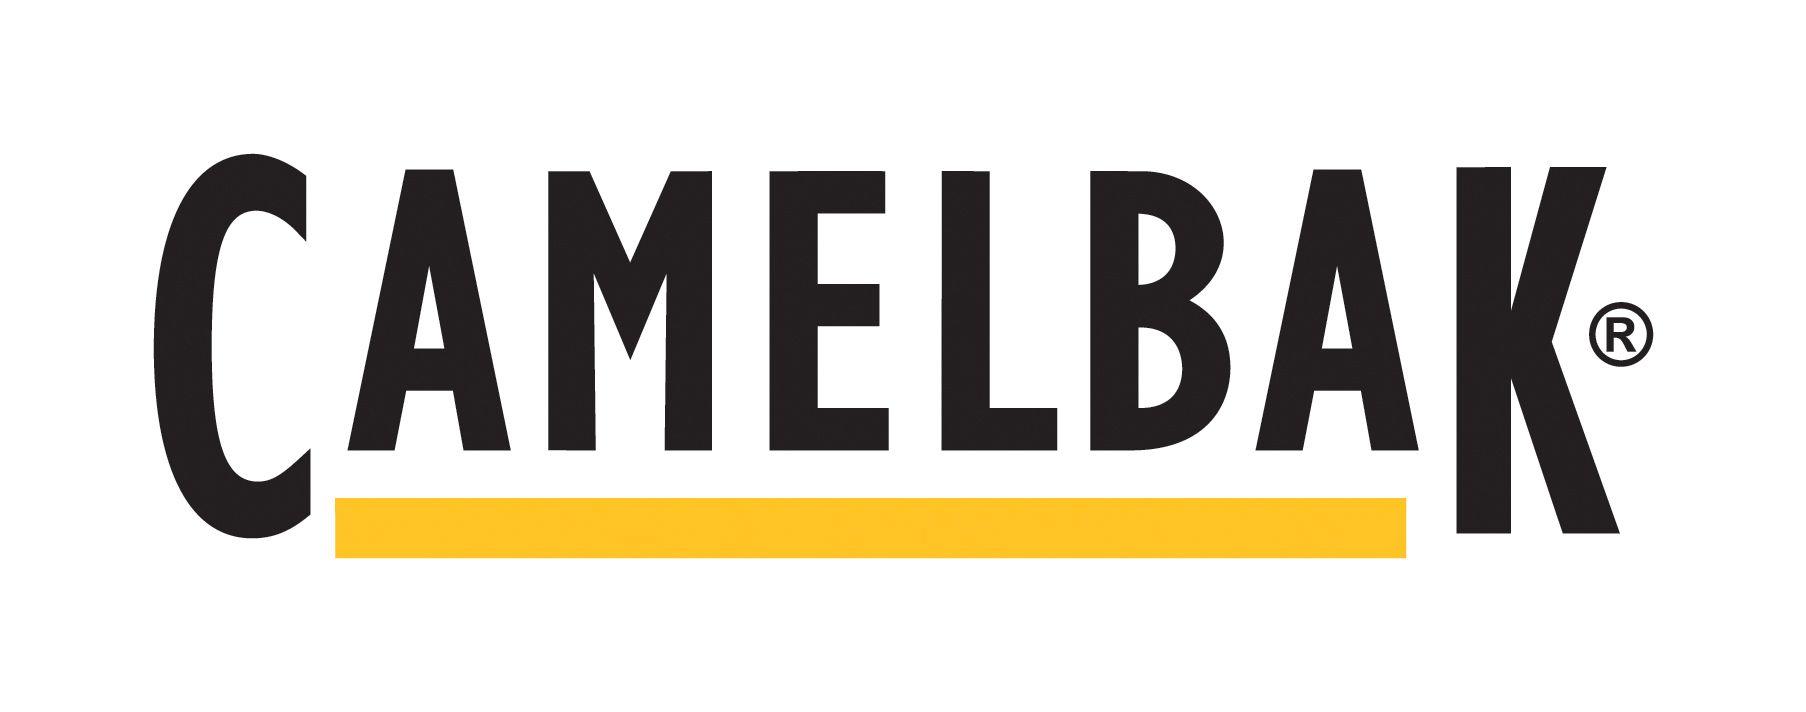 CamelBak Logo - Camelbak. Some of Our Brands. Only the Best. Industry logo